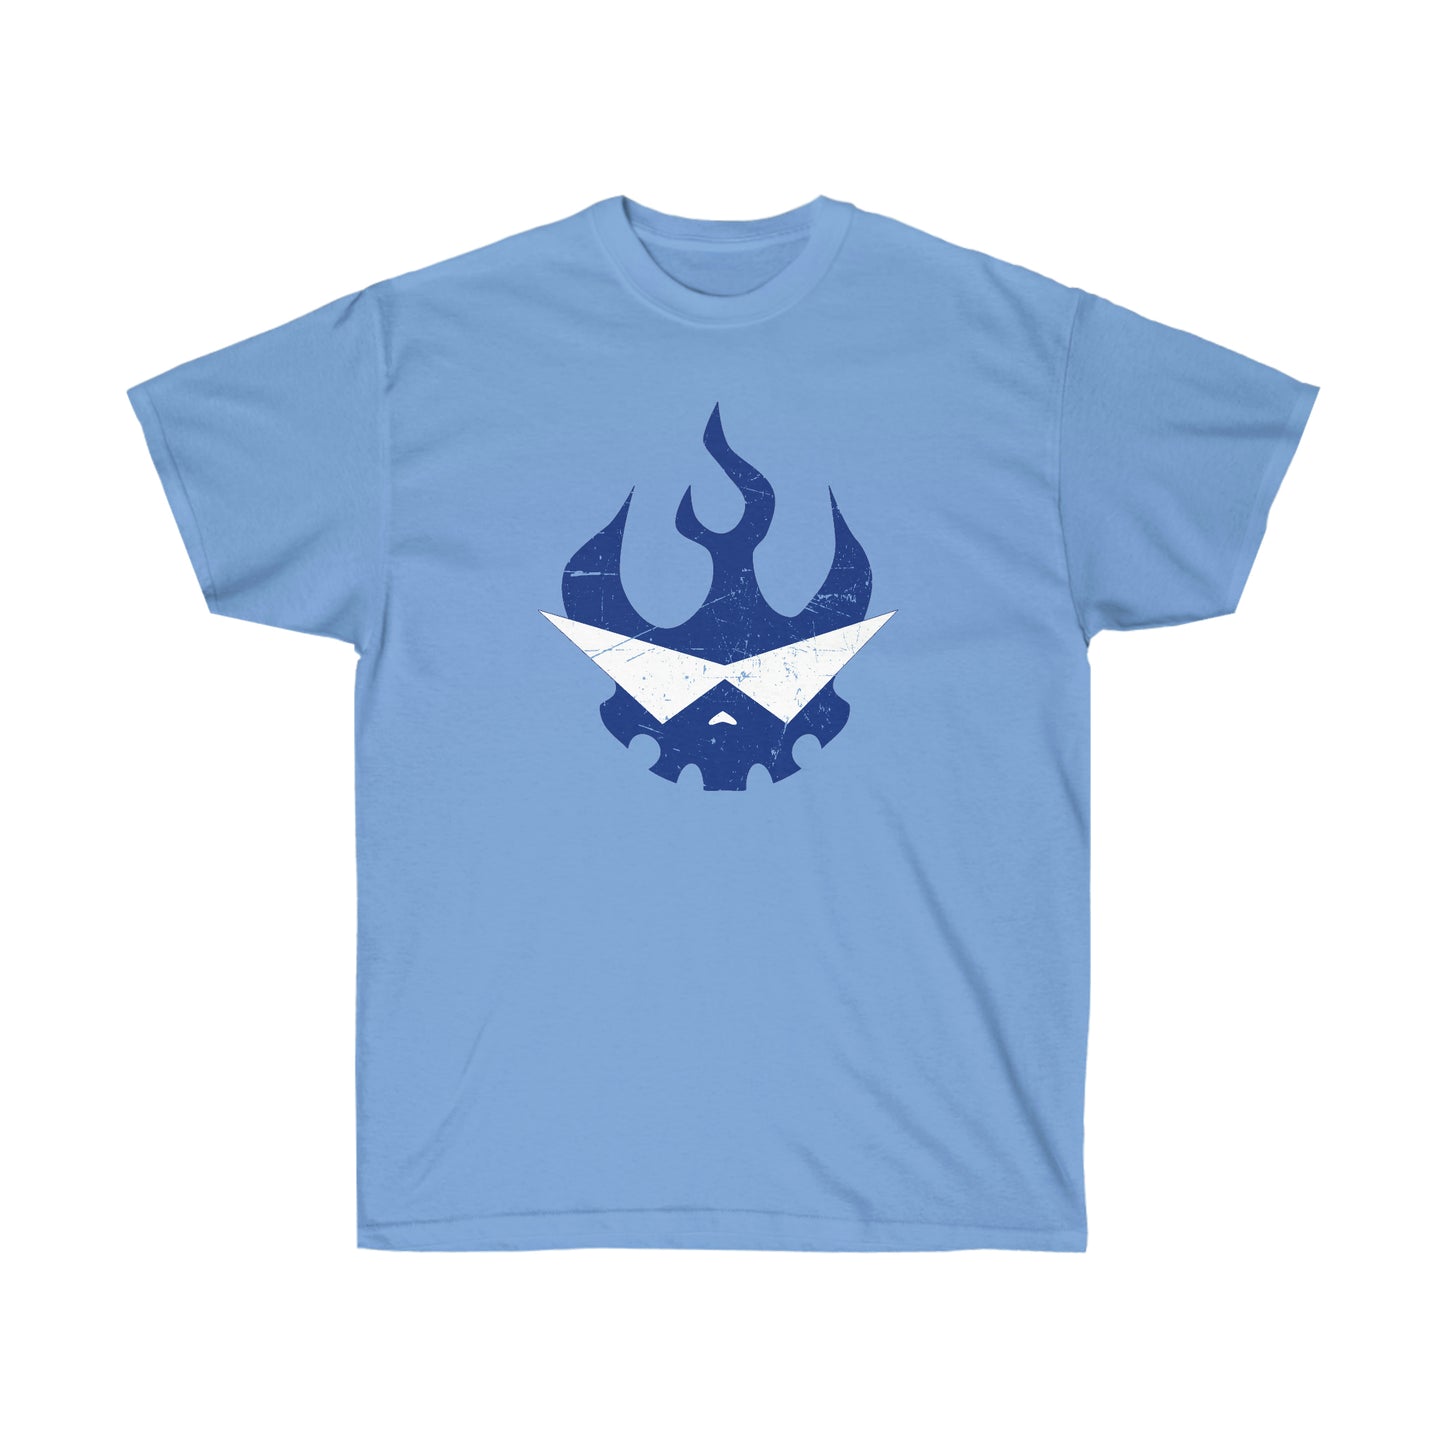 Gurrens Laganns shirt distressed logo typography Classic T-Shirt Vintage blue